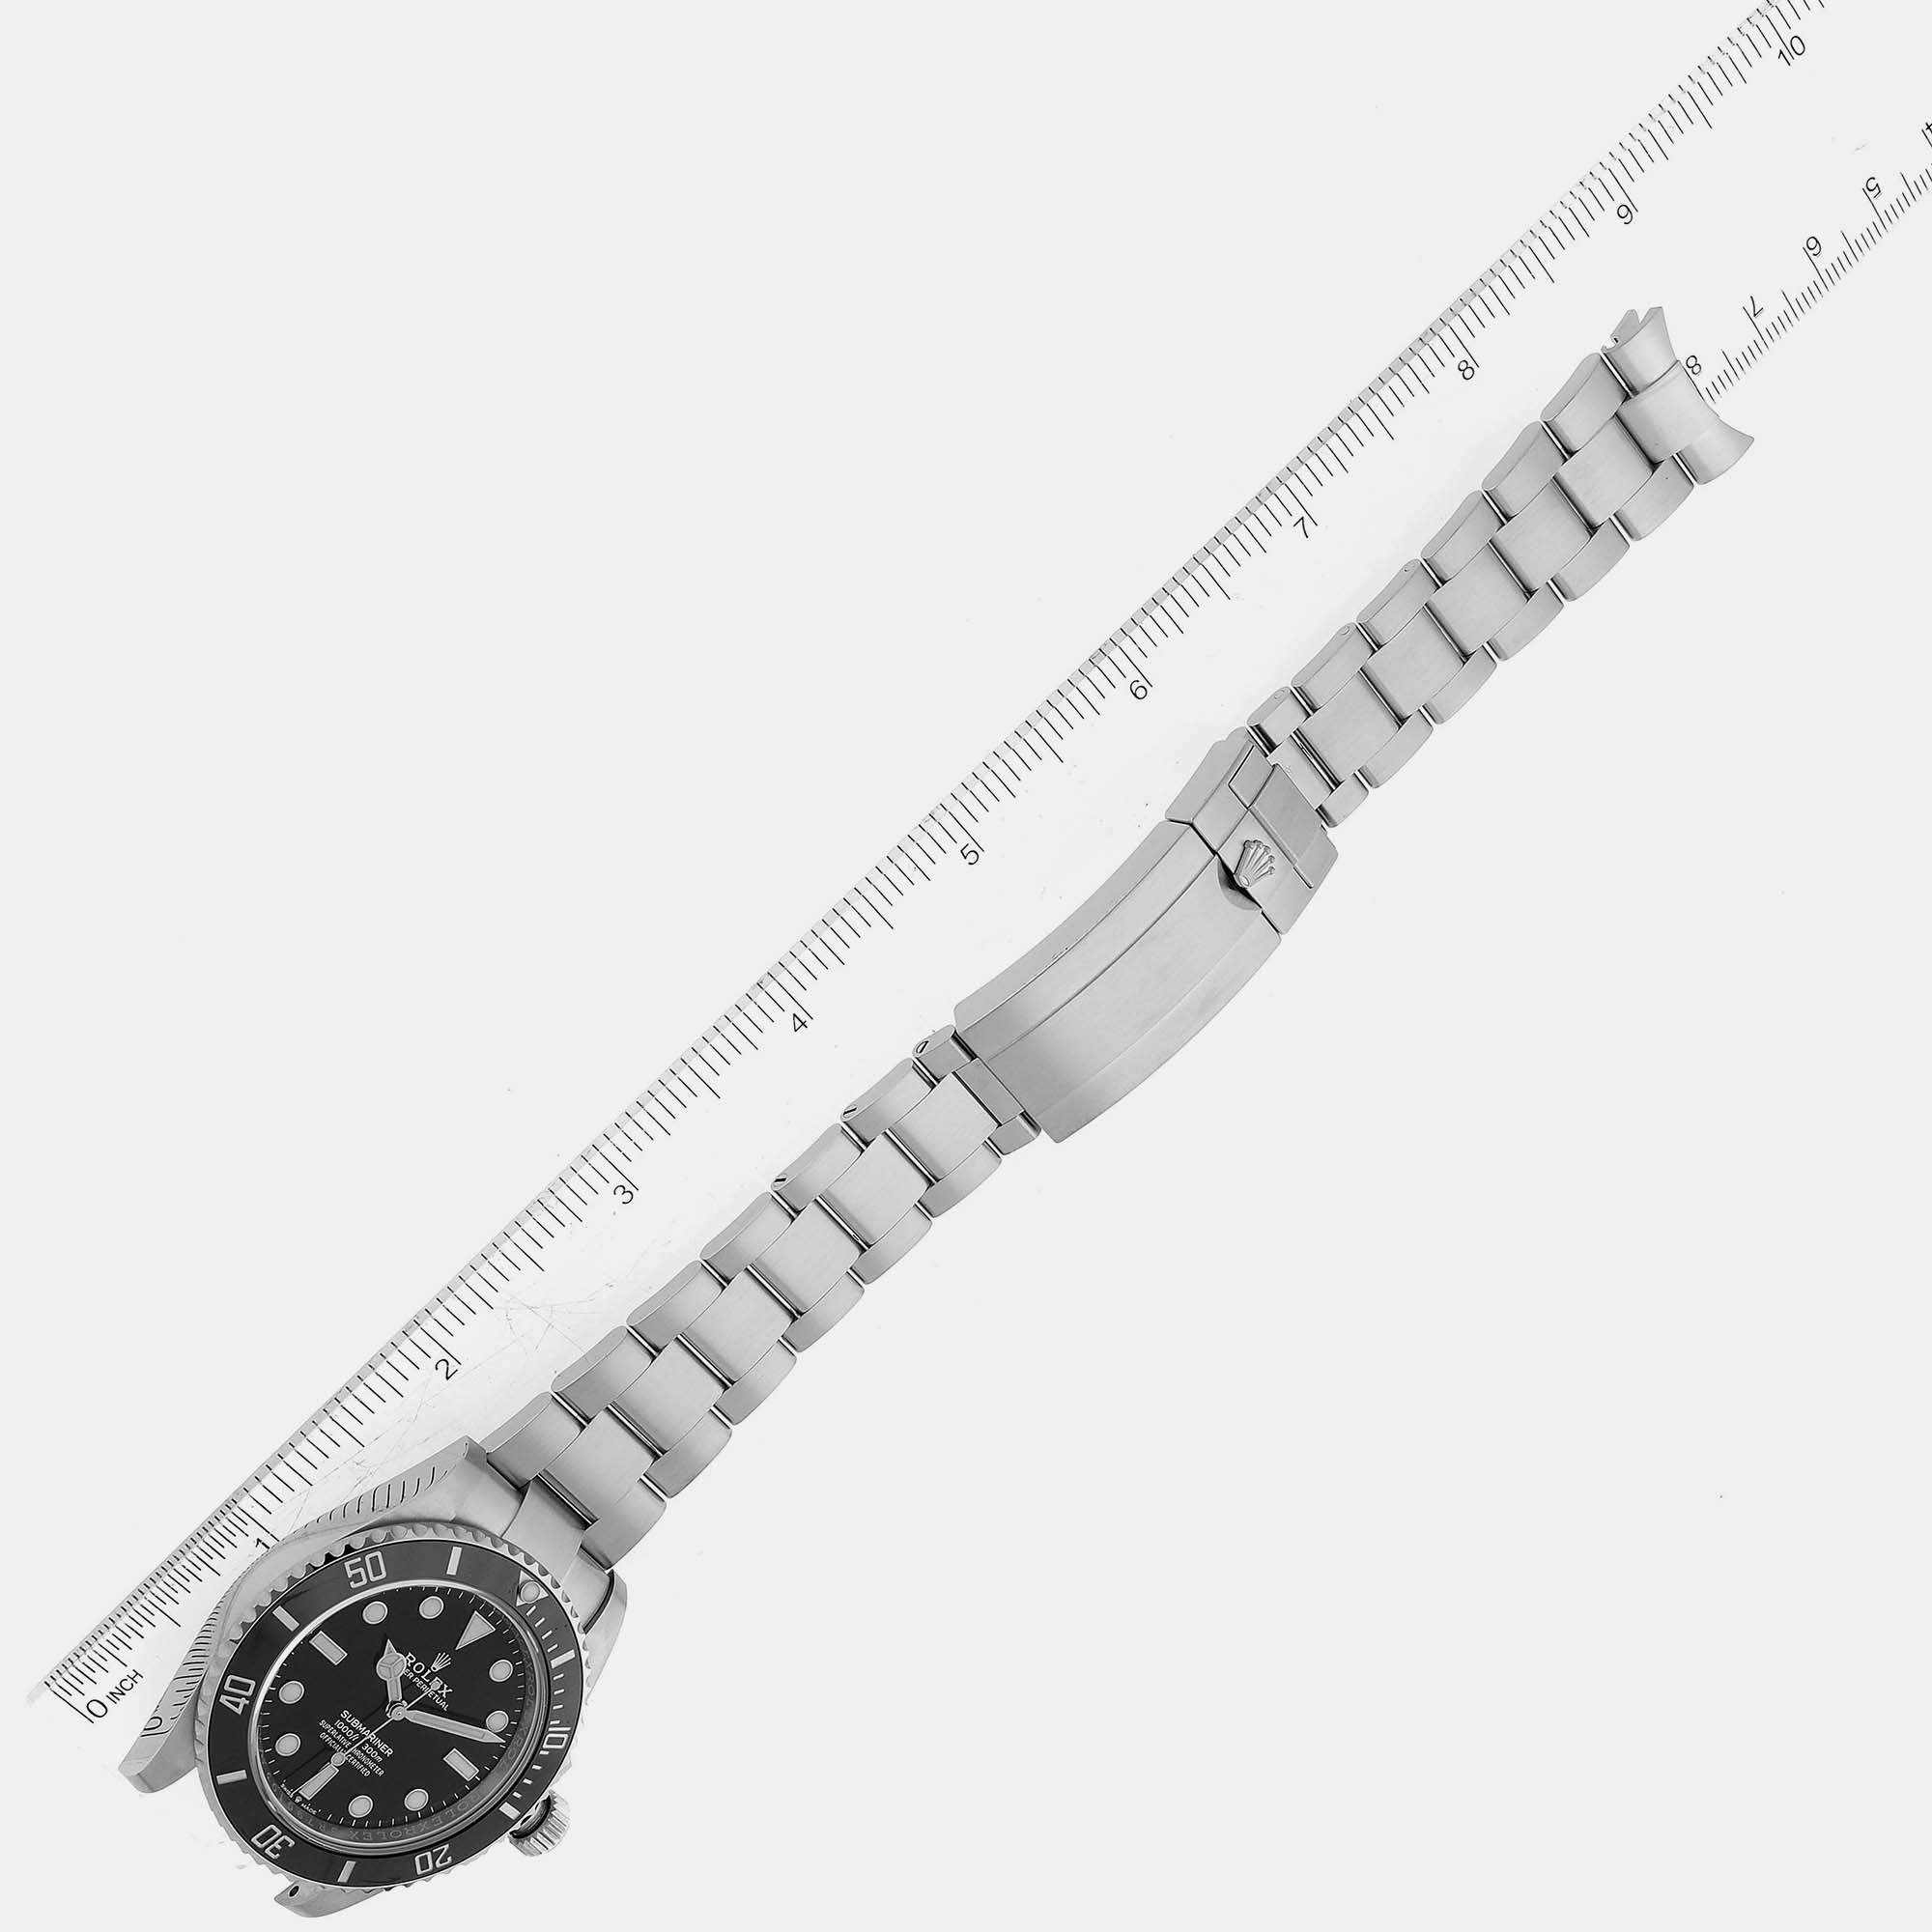 Rolex Submariner Non-Date Ceramic Bezel Steel Mens Watch 124060 Unworn